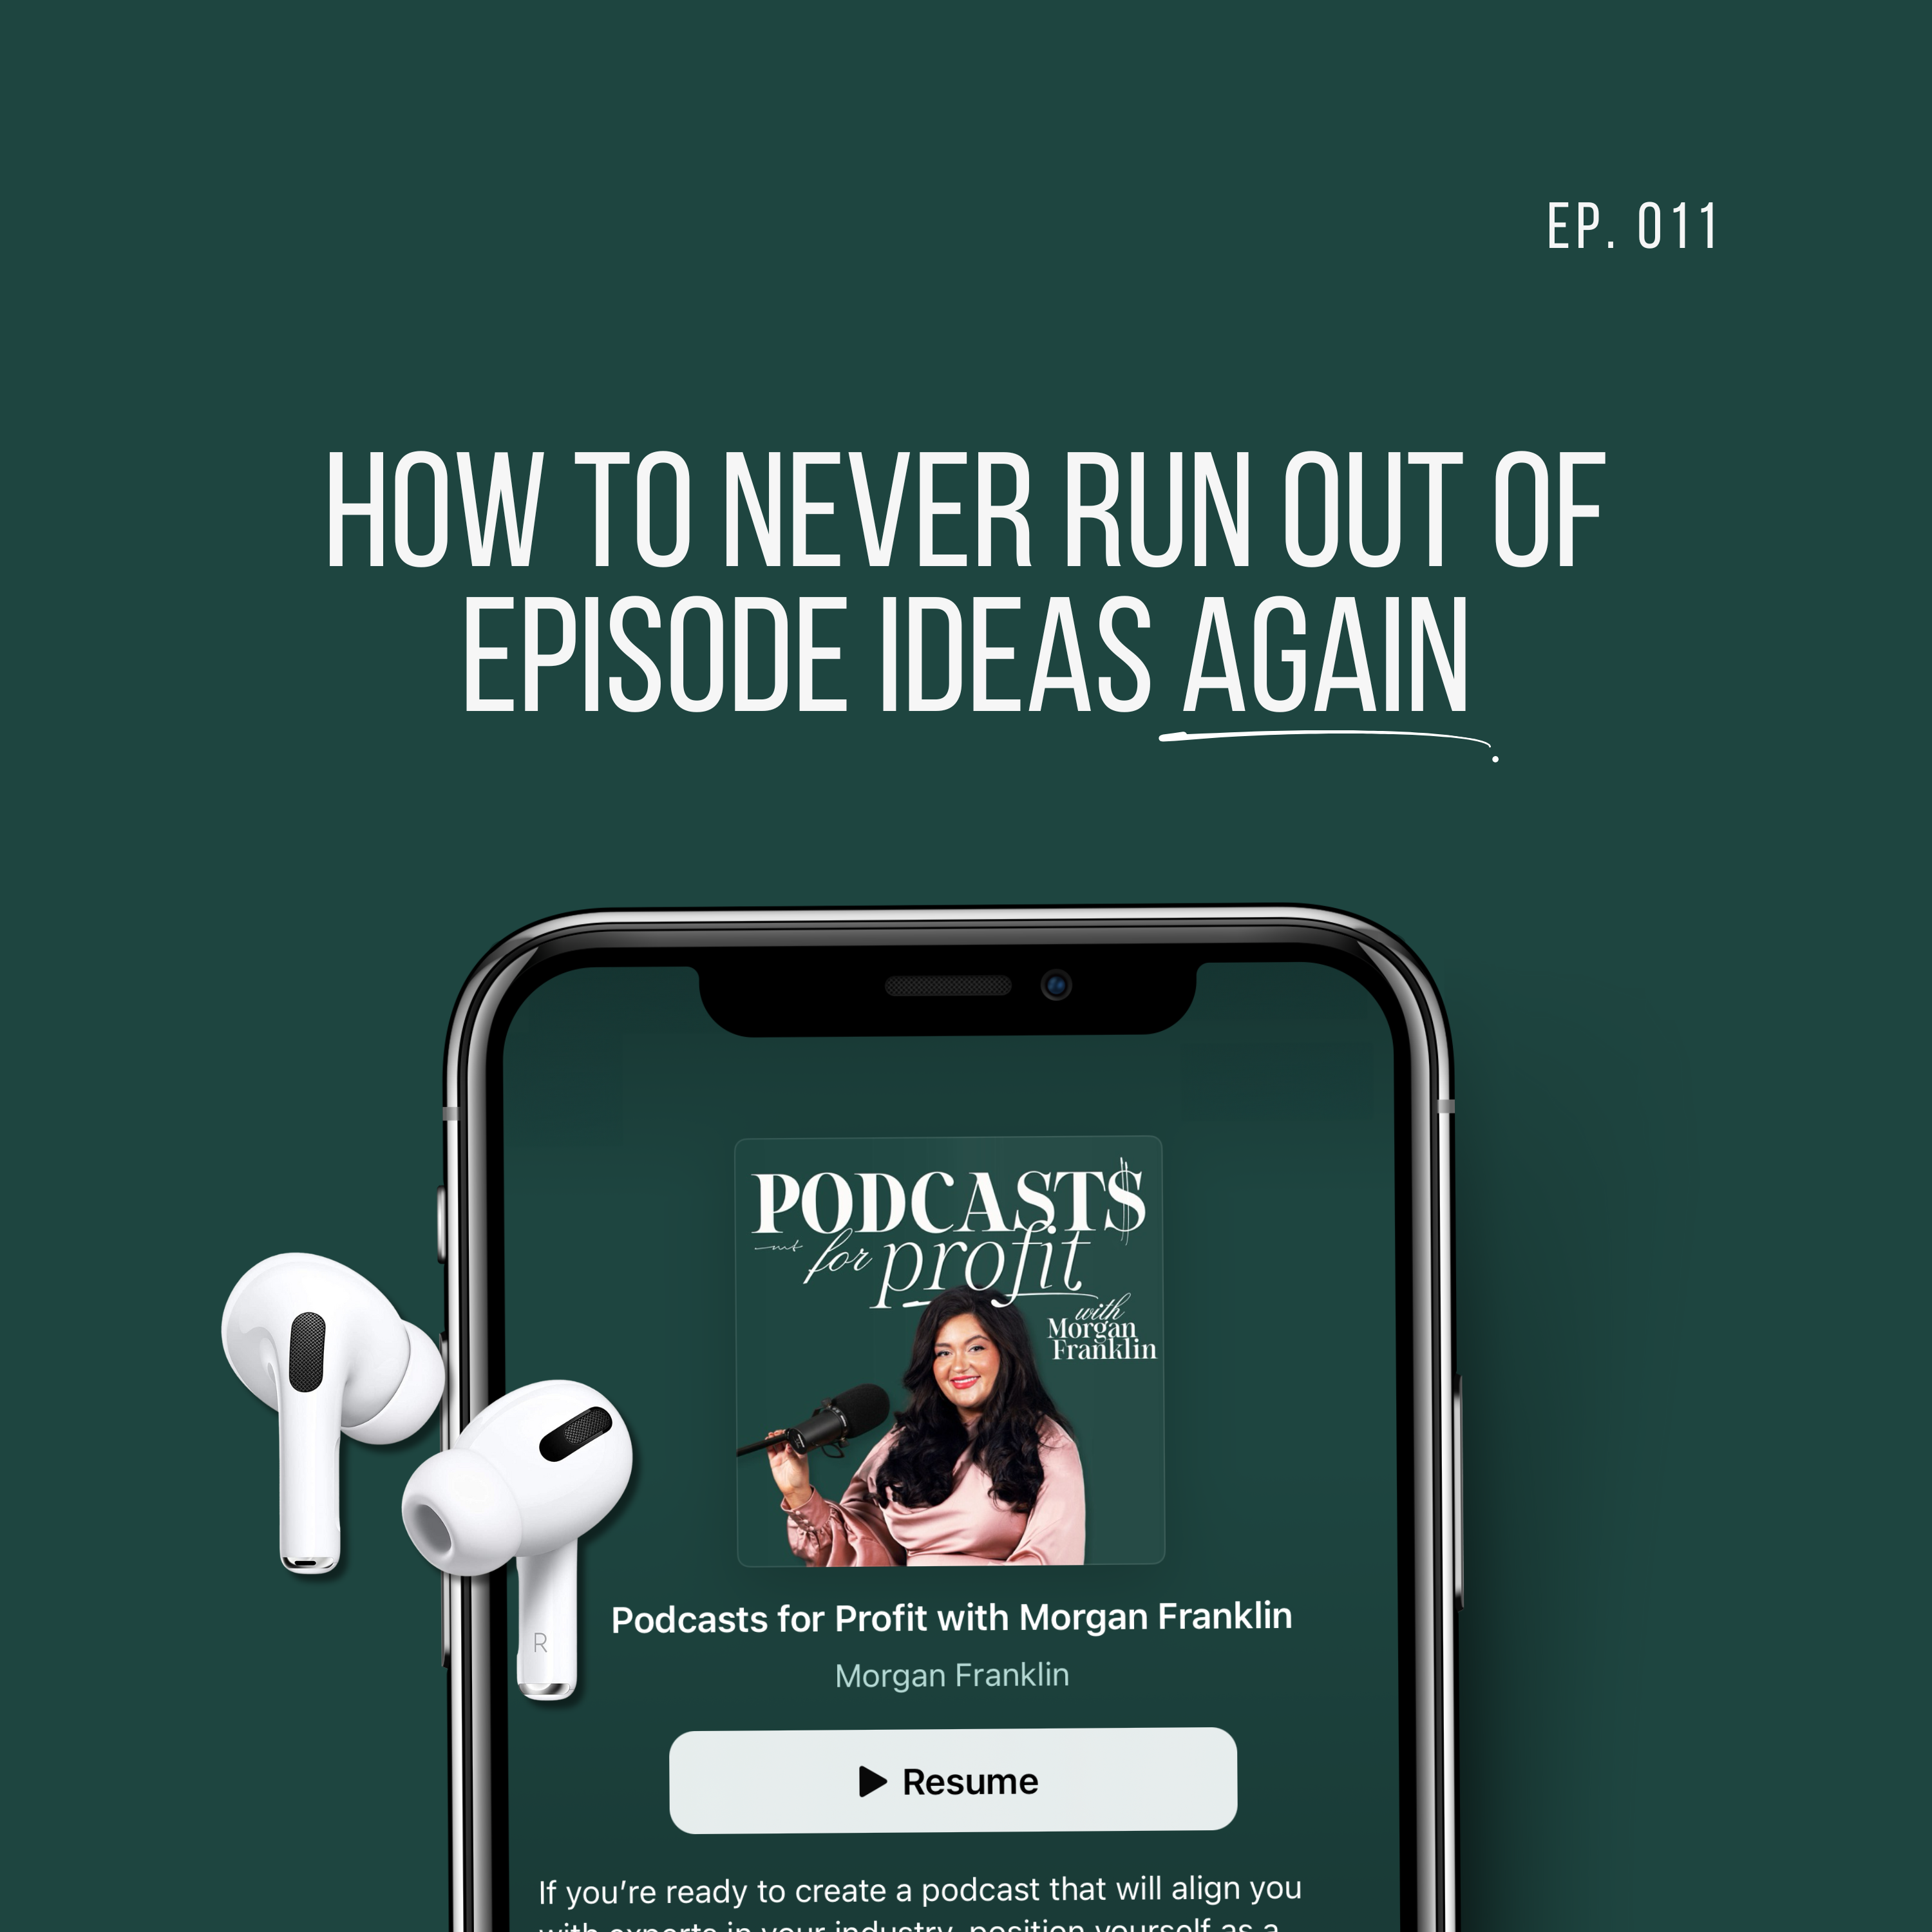 Podcast Episode Ideas